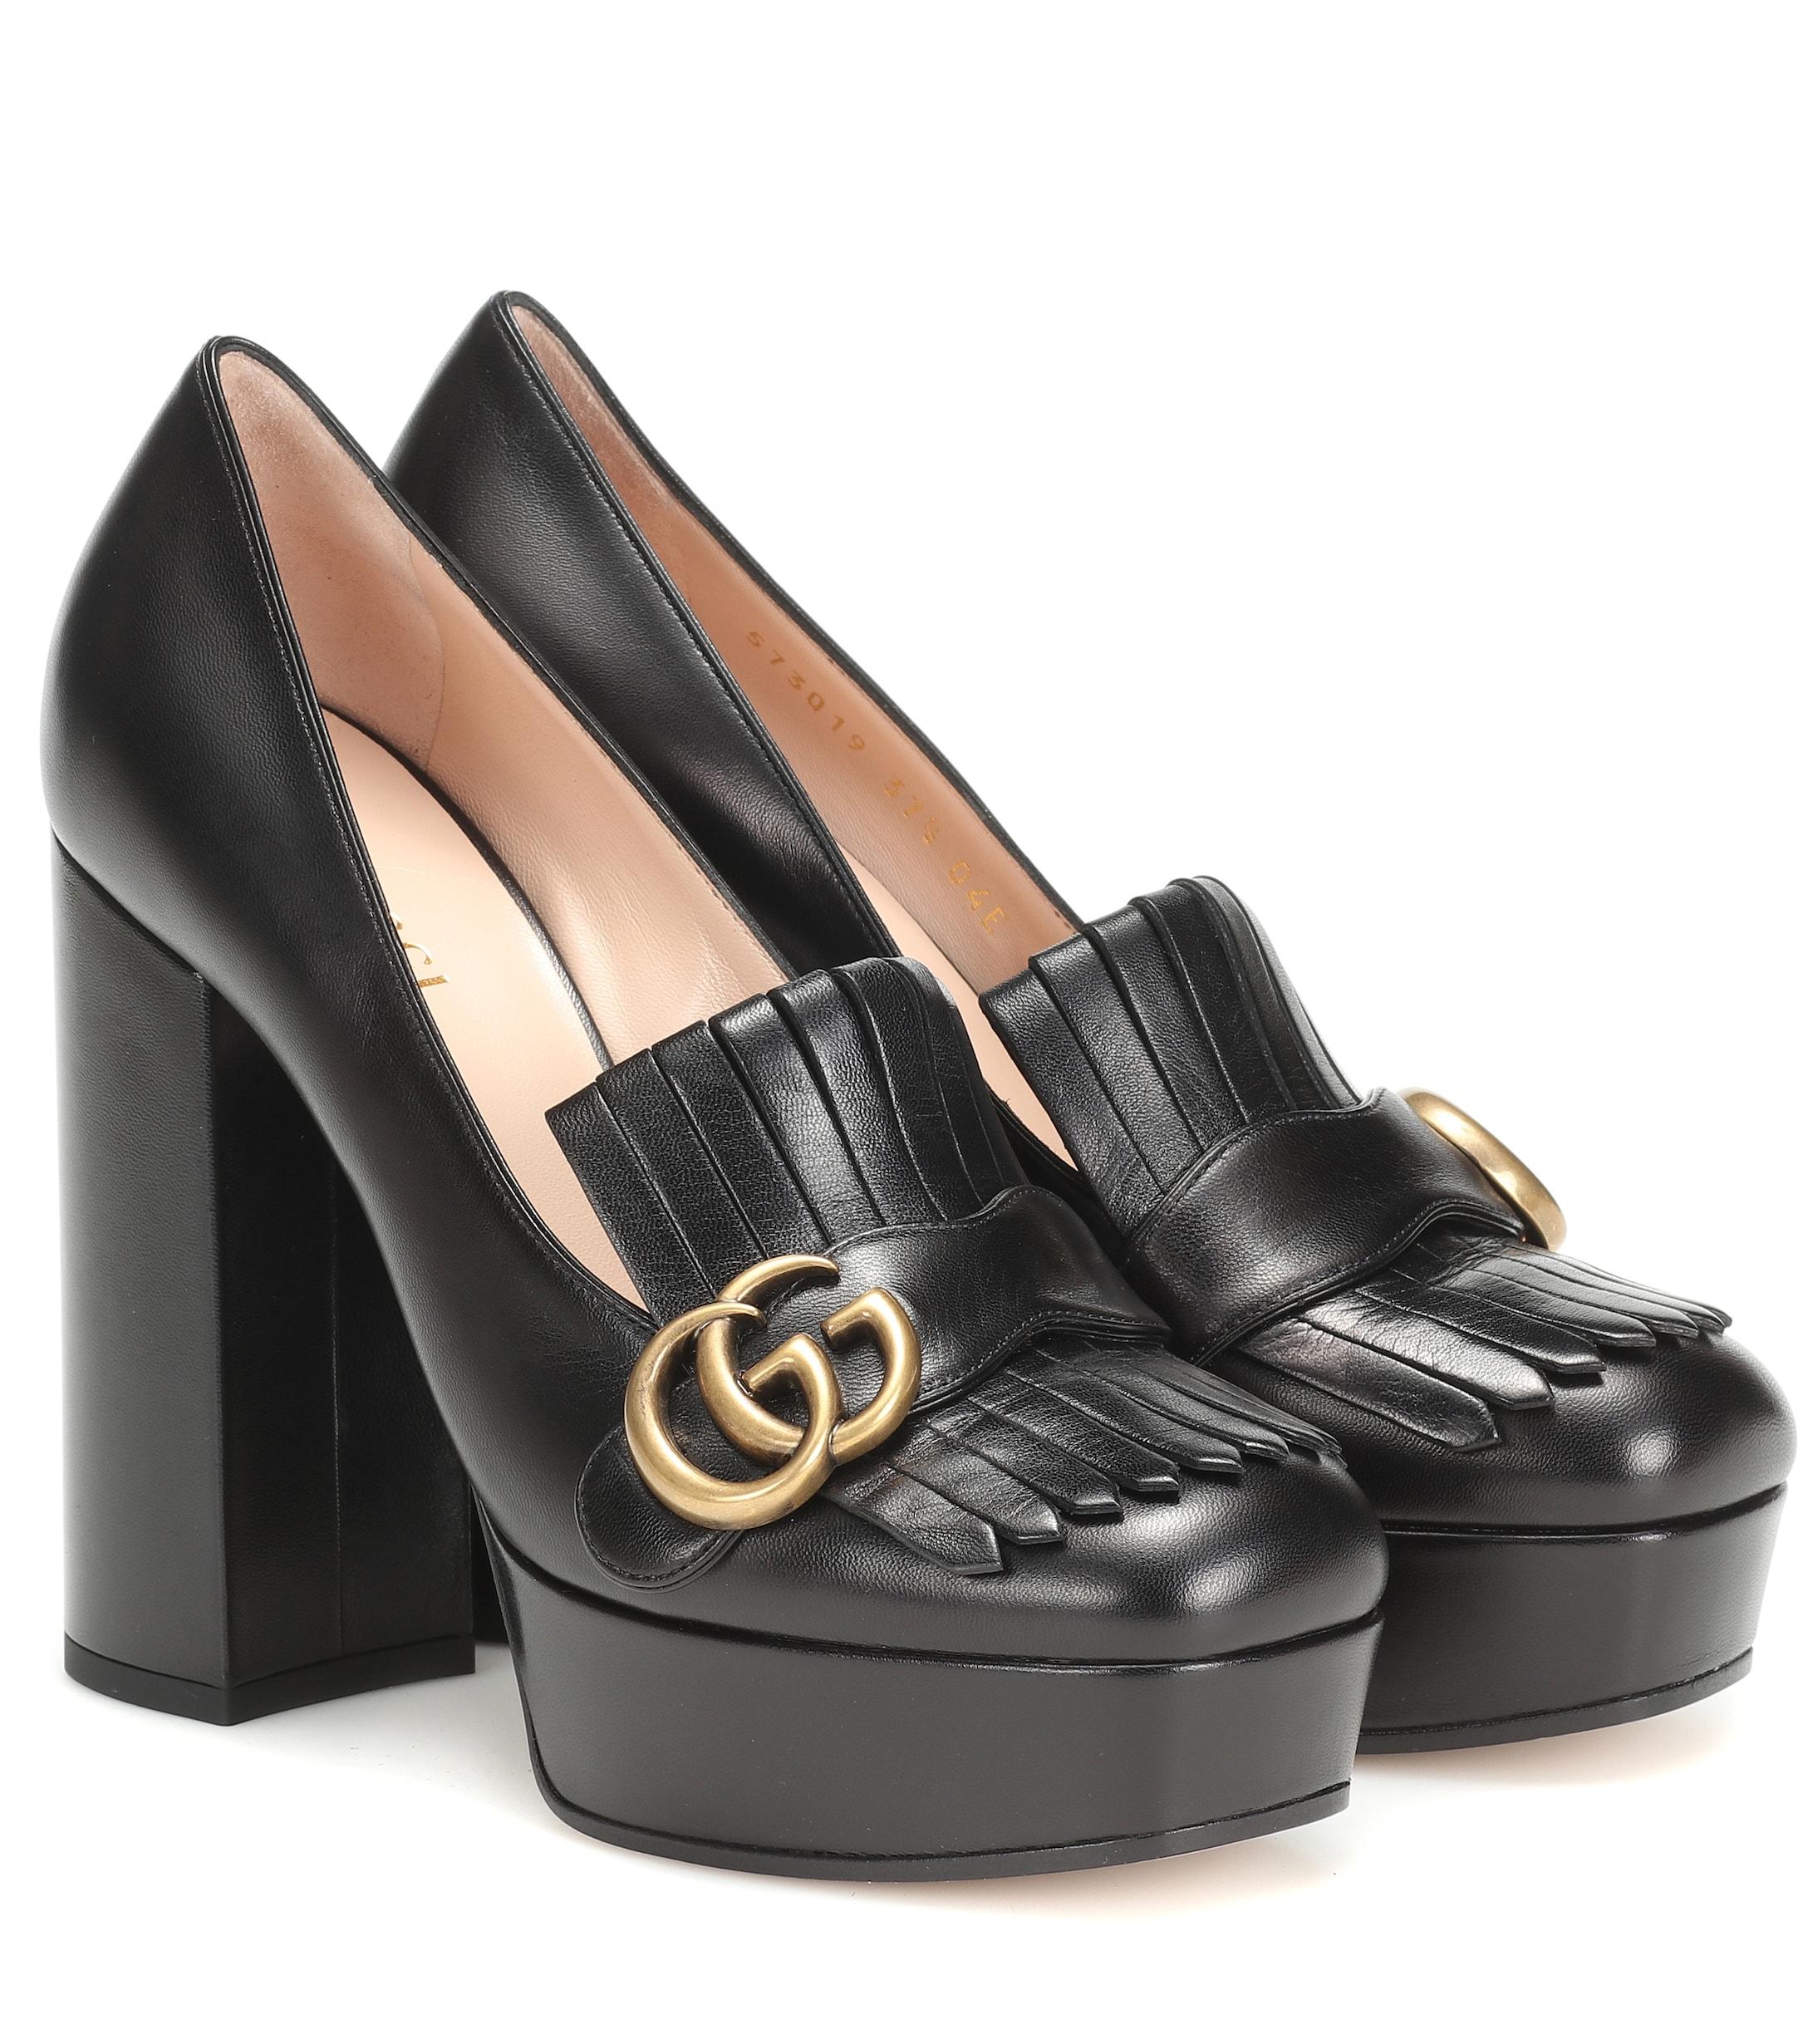 Gucci Marmont Leather Platform Pumps in Nero (Black) - Lyst